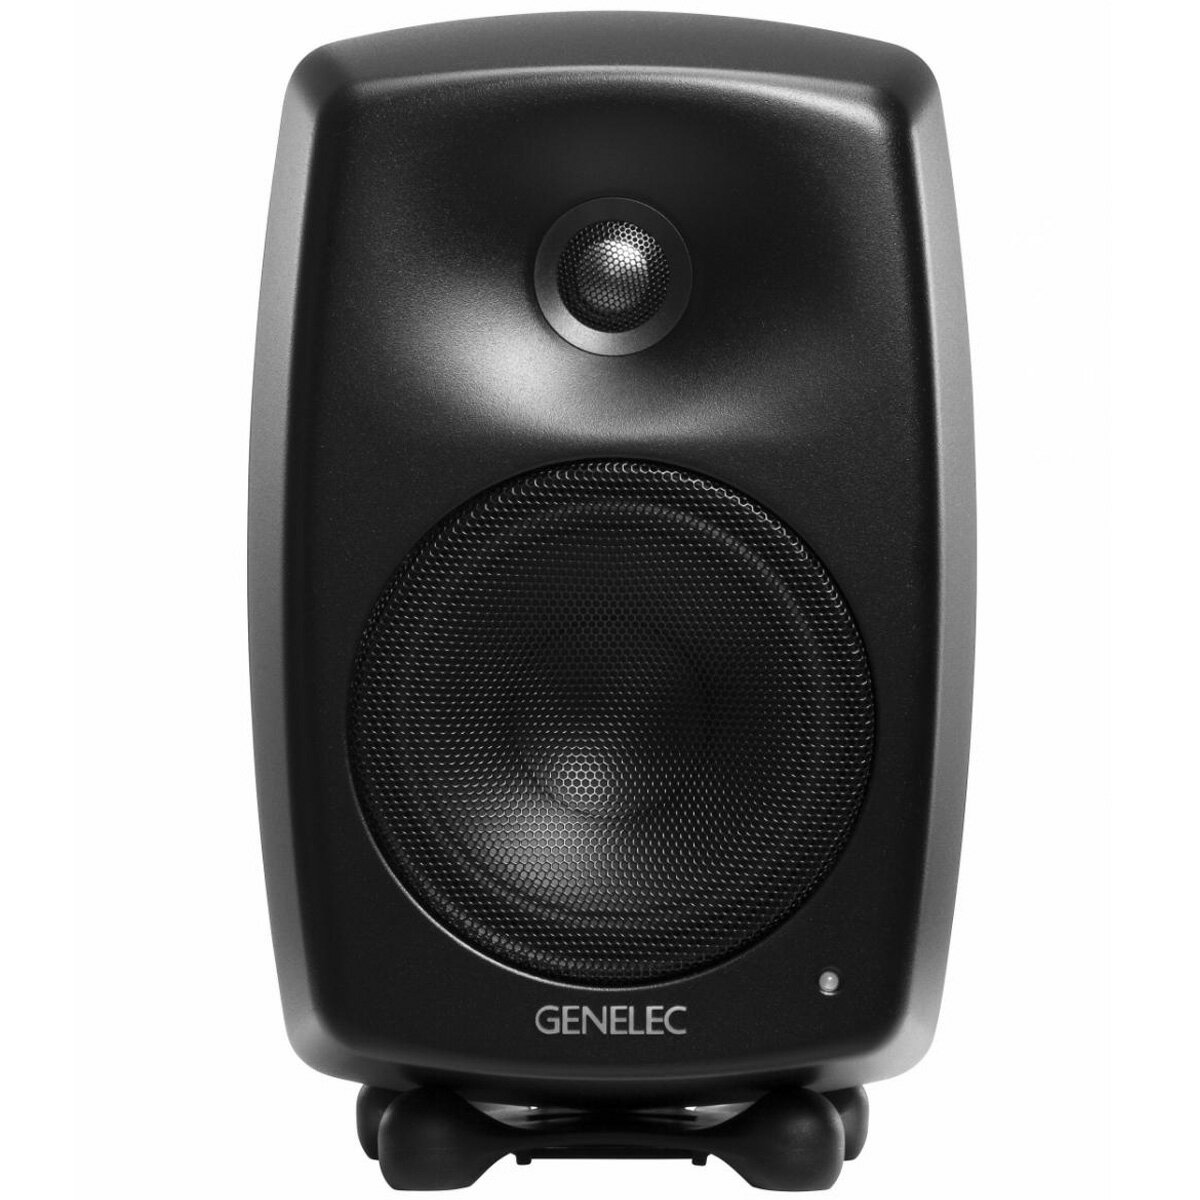 GENELEC ジェネレック / G Three ブラック (1本) Home Audio Systems【お取り寄せ商品】